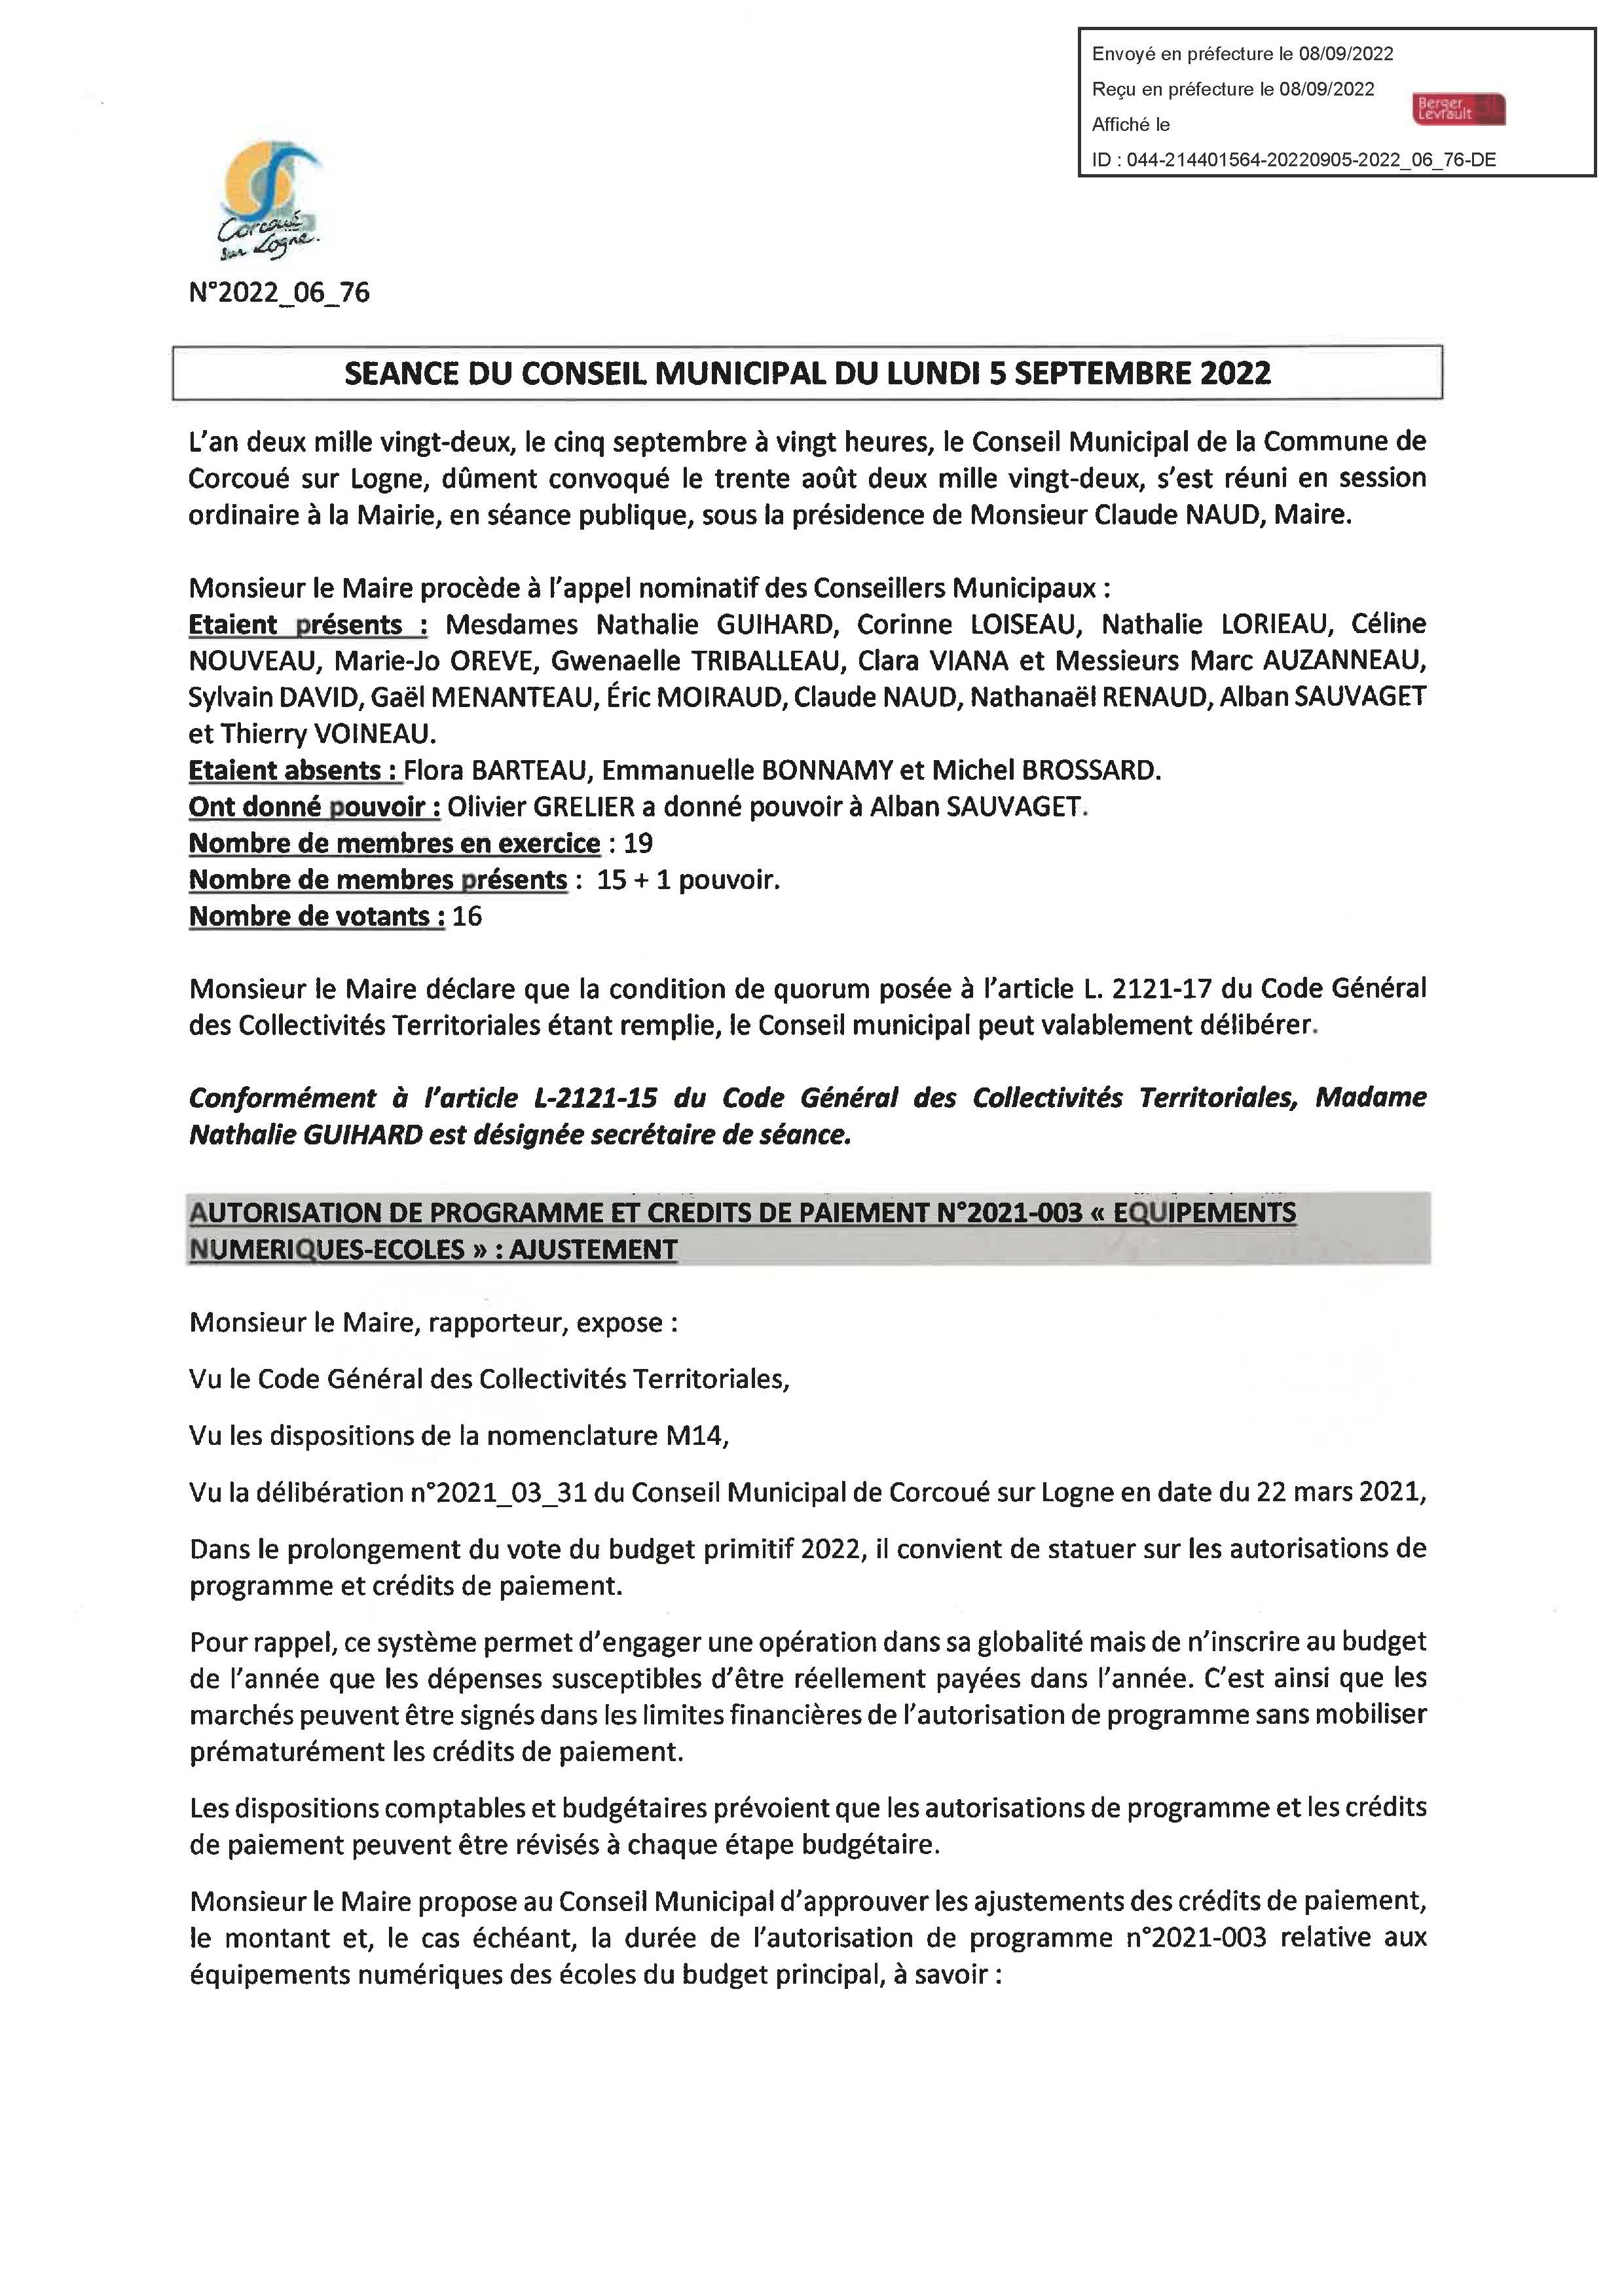 2022_06_76 APC CP 2021-003 Equipements numériques écoles_Page_1.jpg